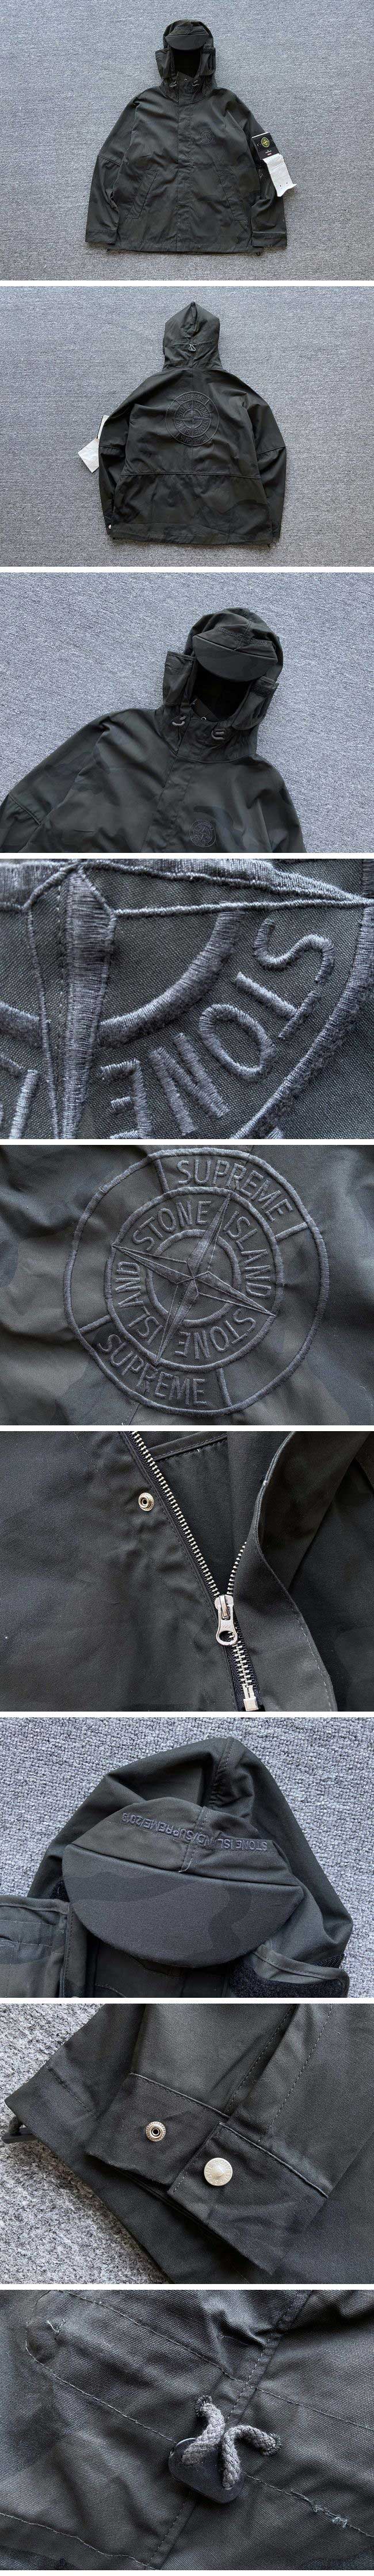 Supreme x Stone Island Jacket Parker シュプリーム x ストーン アイランド ジャケット パーカー ブラック